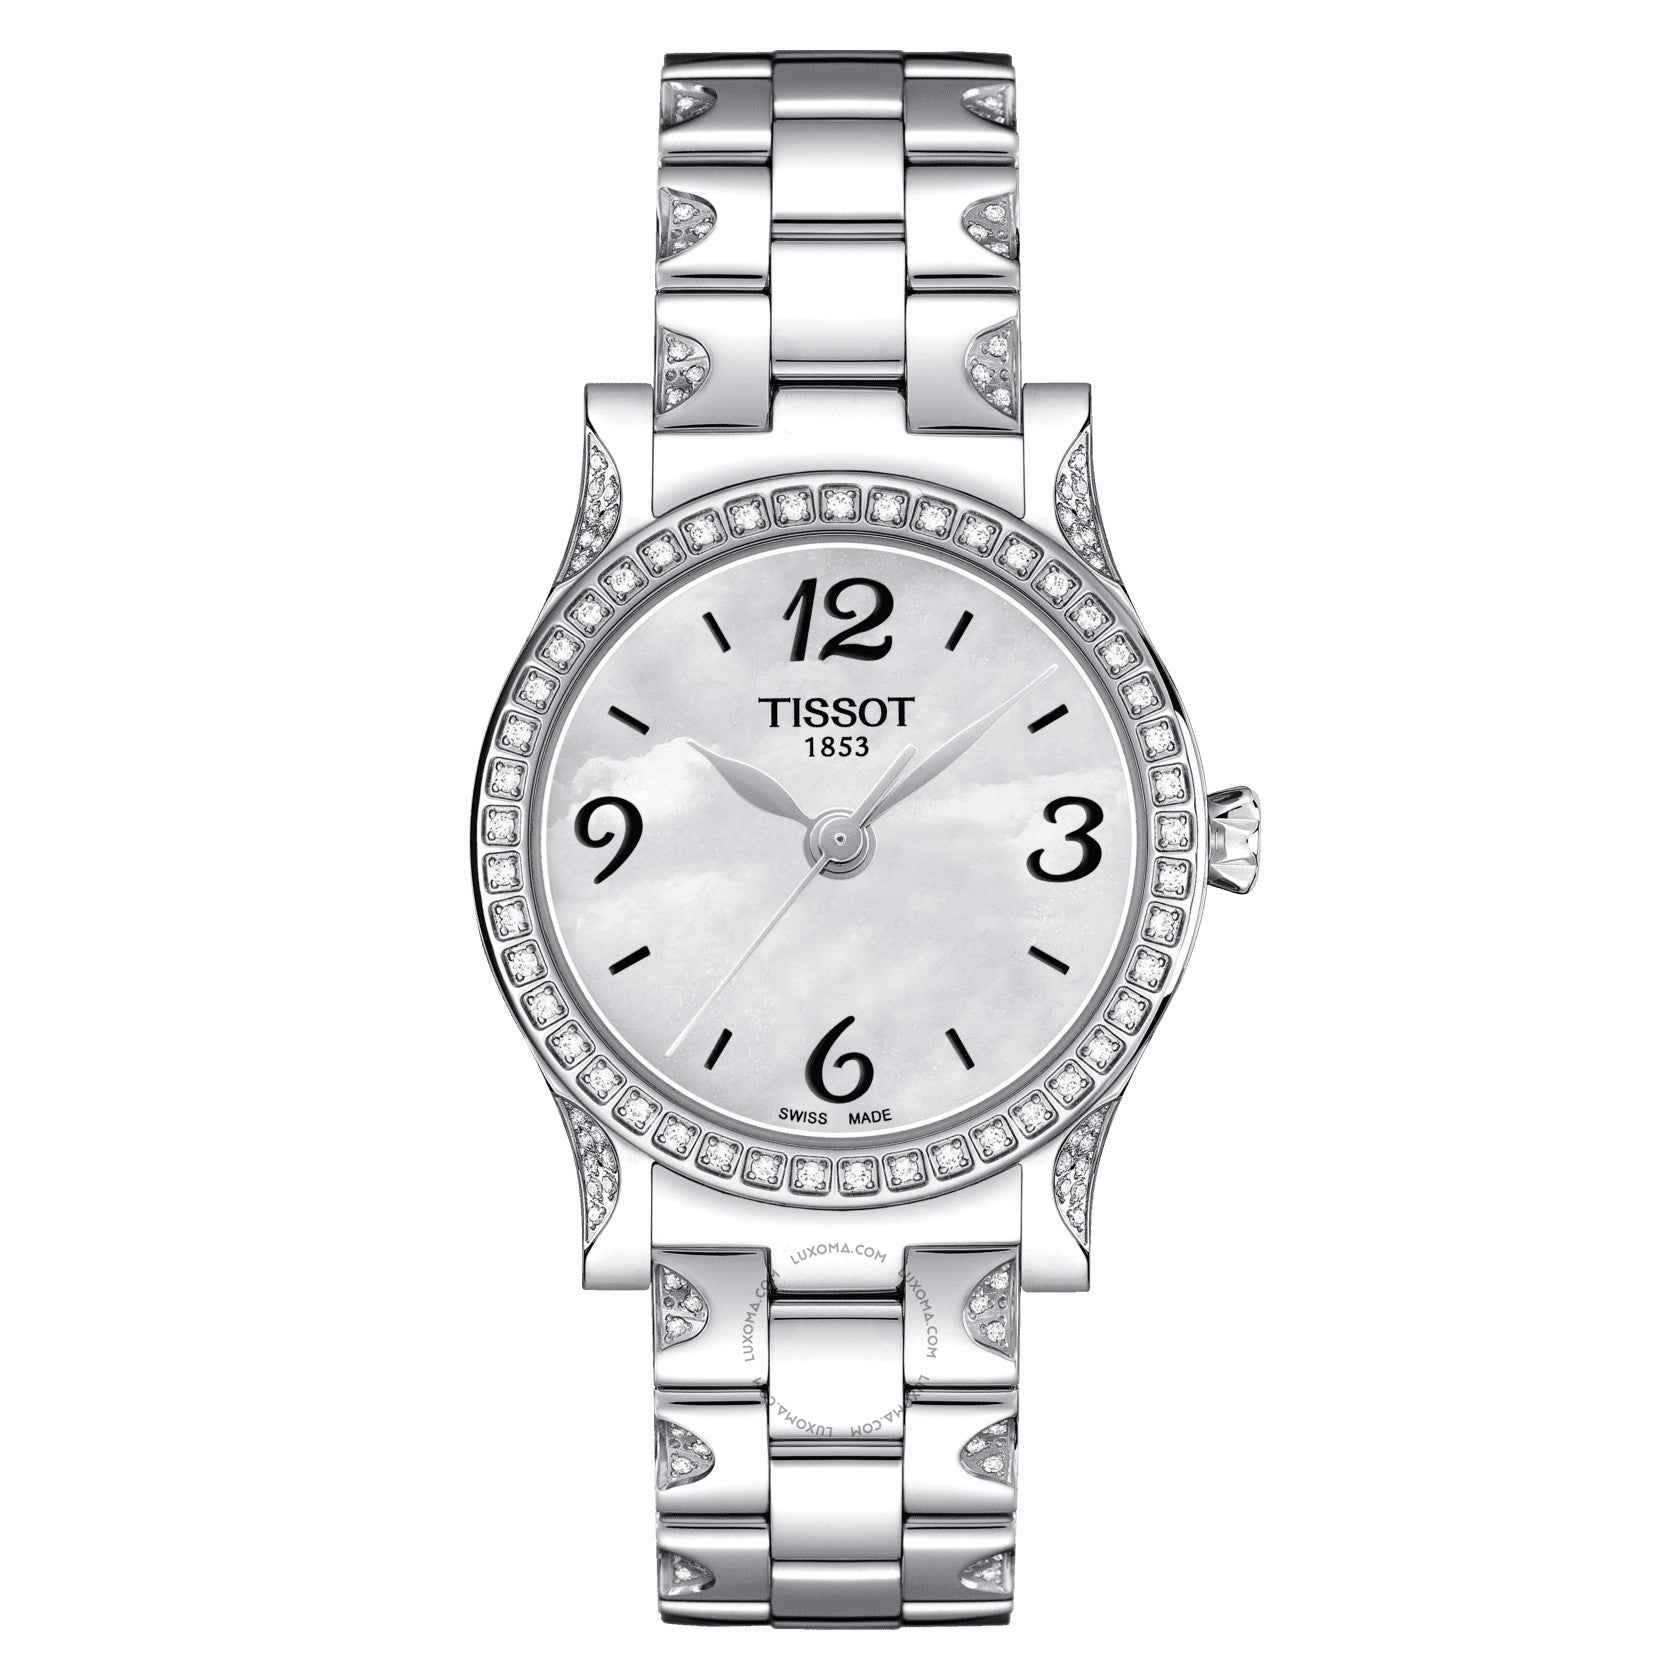 Tissot Stylis-T Quartz White Mother of Pearl Dial Ladies Watch T028.210.11.117.00